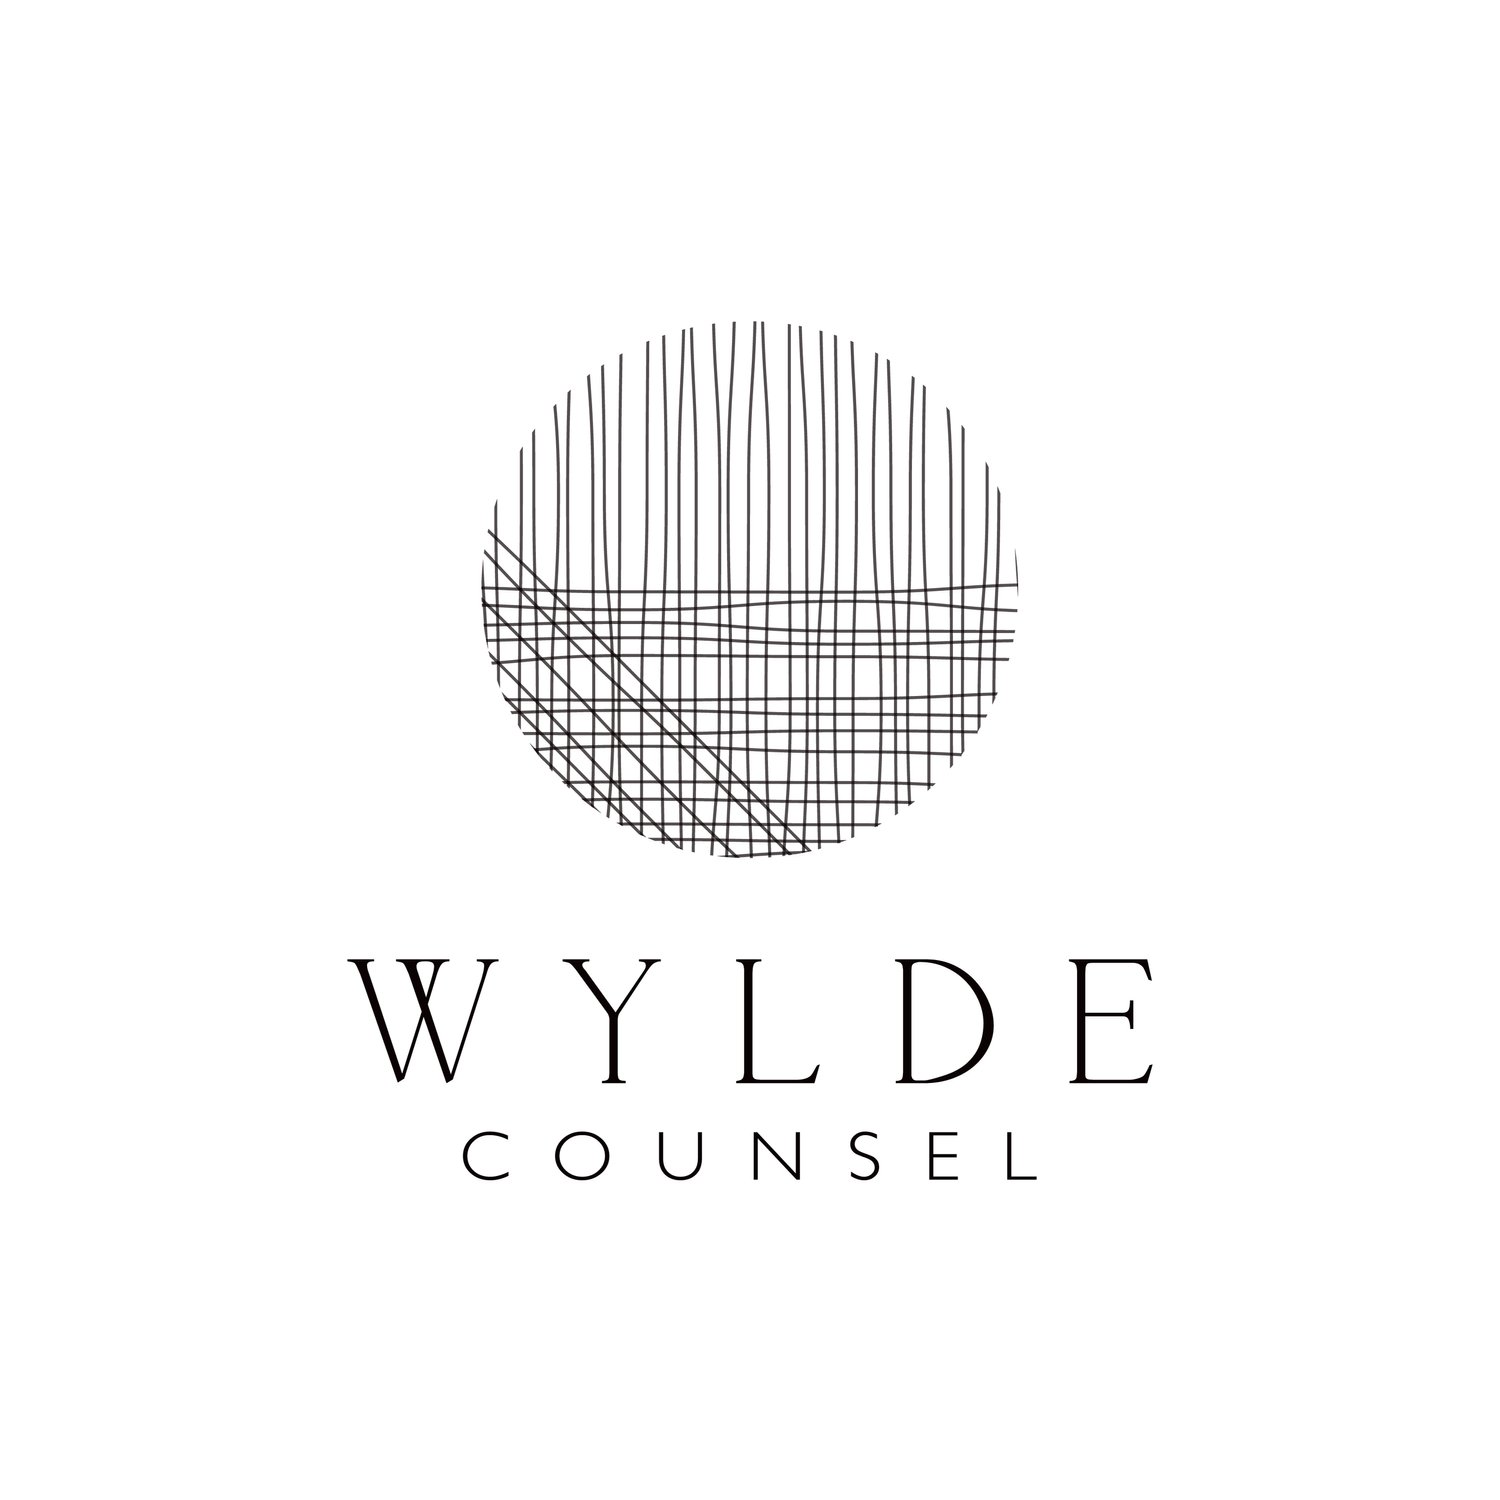 Wylde Counsel